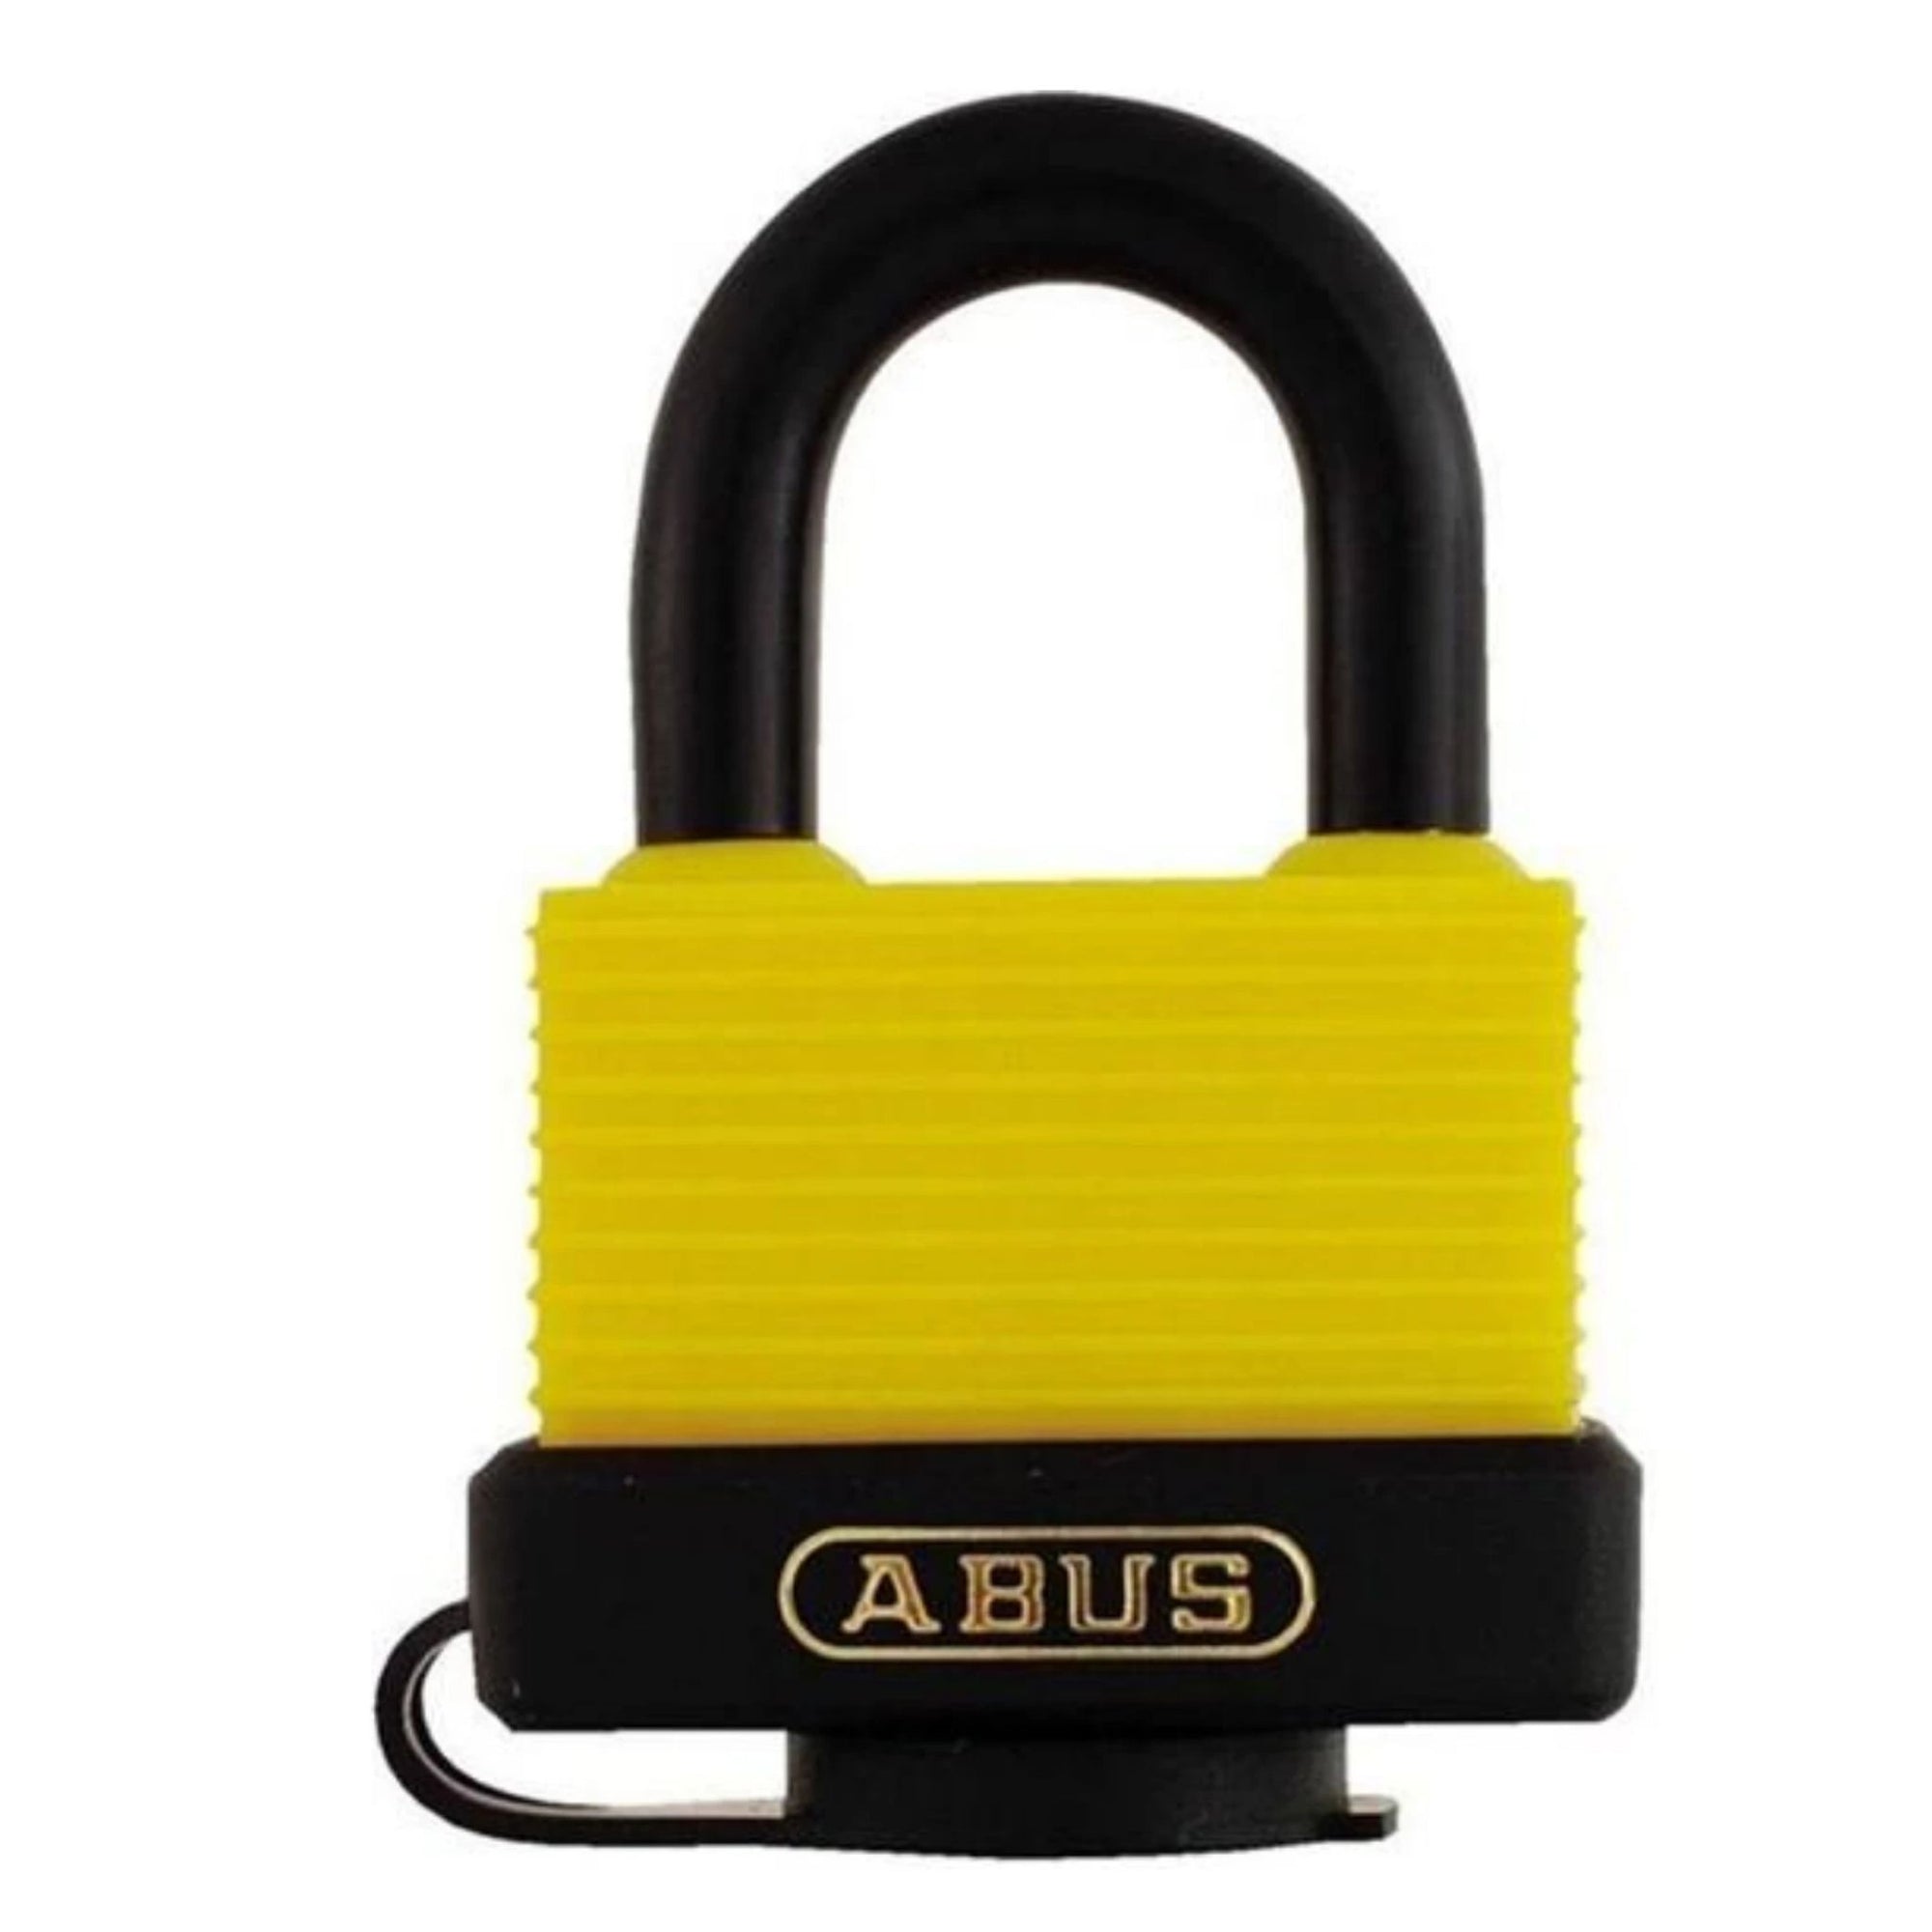 Abus 70/45 KA 6402 Lock Keyed Alike Weatherproof Brass Padlocks Keyed Alike to Match Existing Key Number KA6402 - The Lock Source